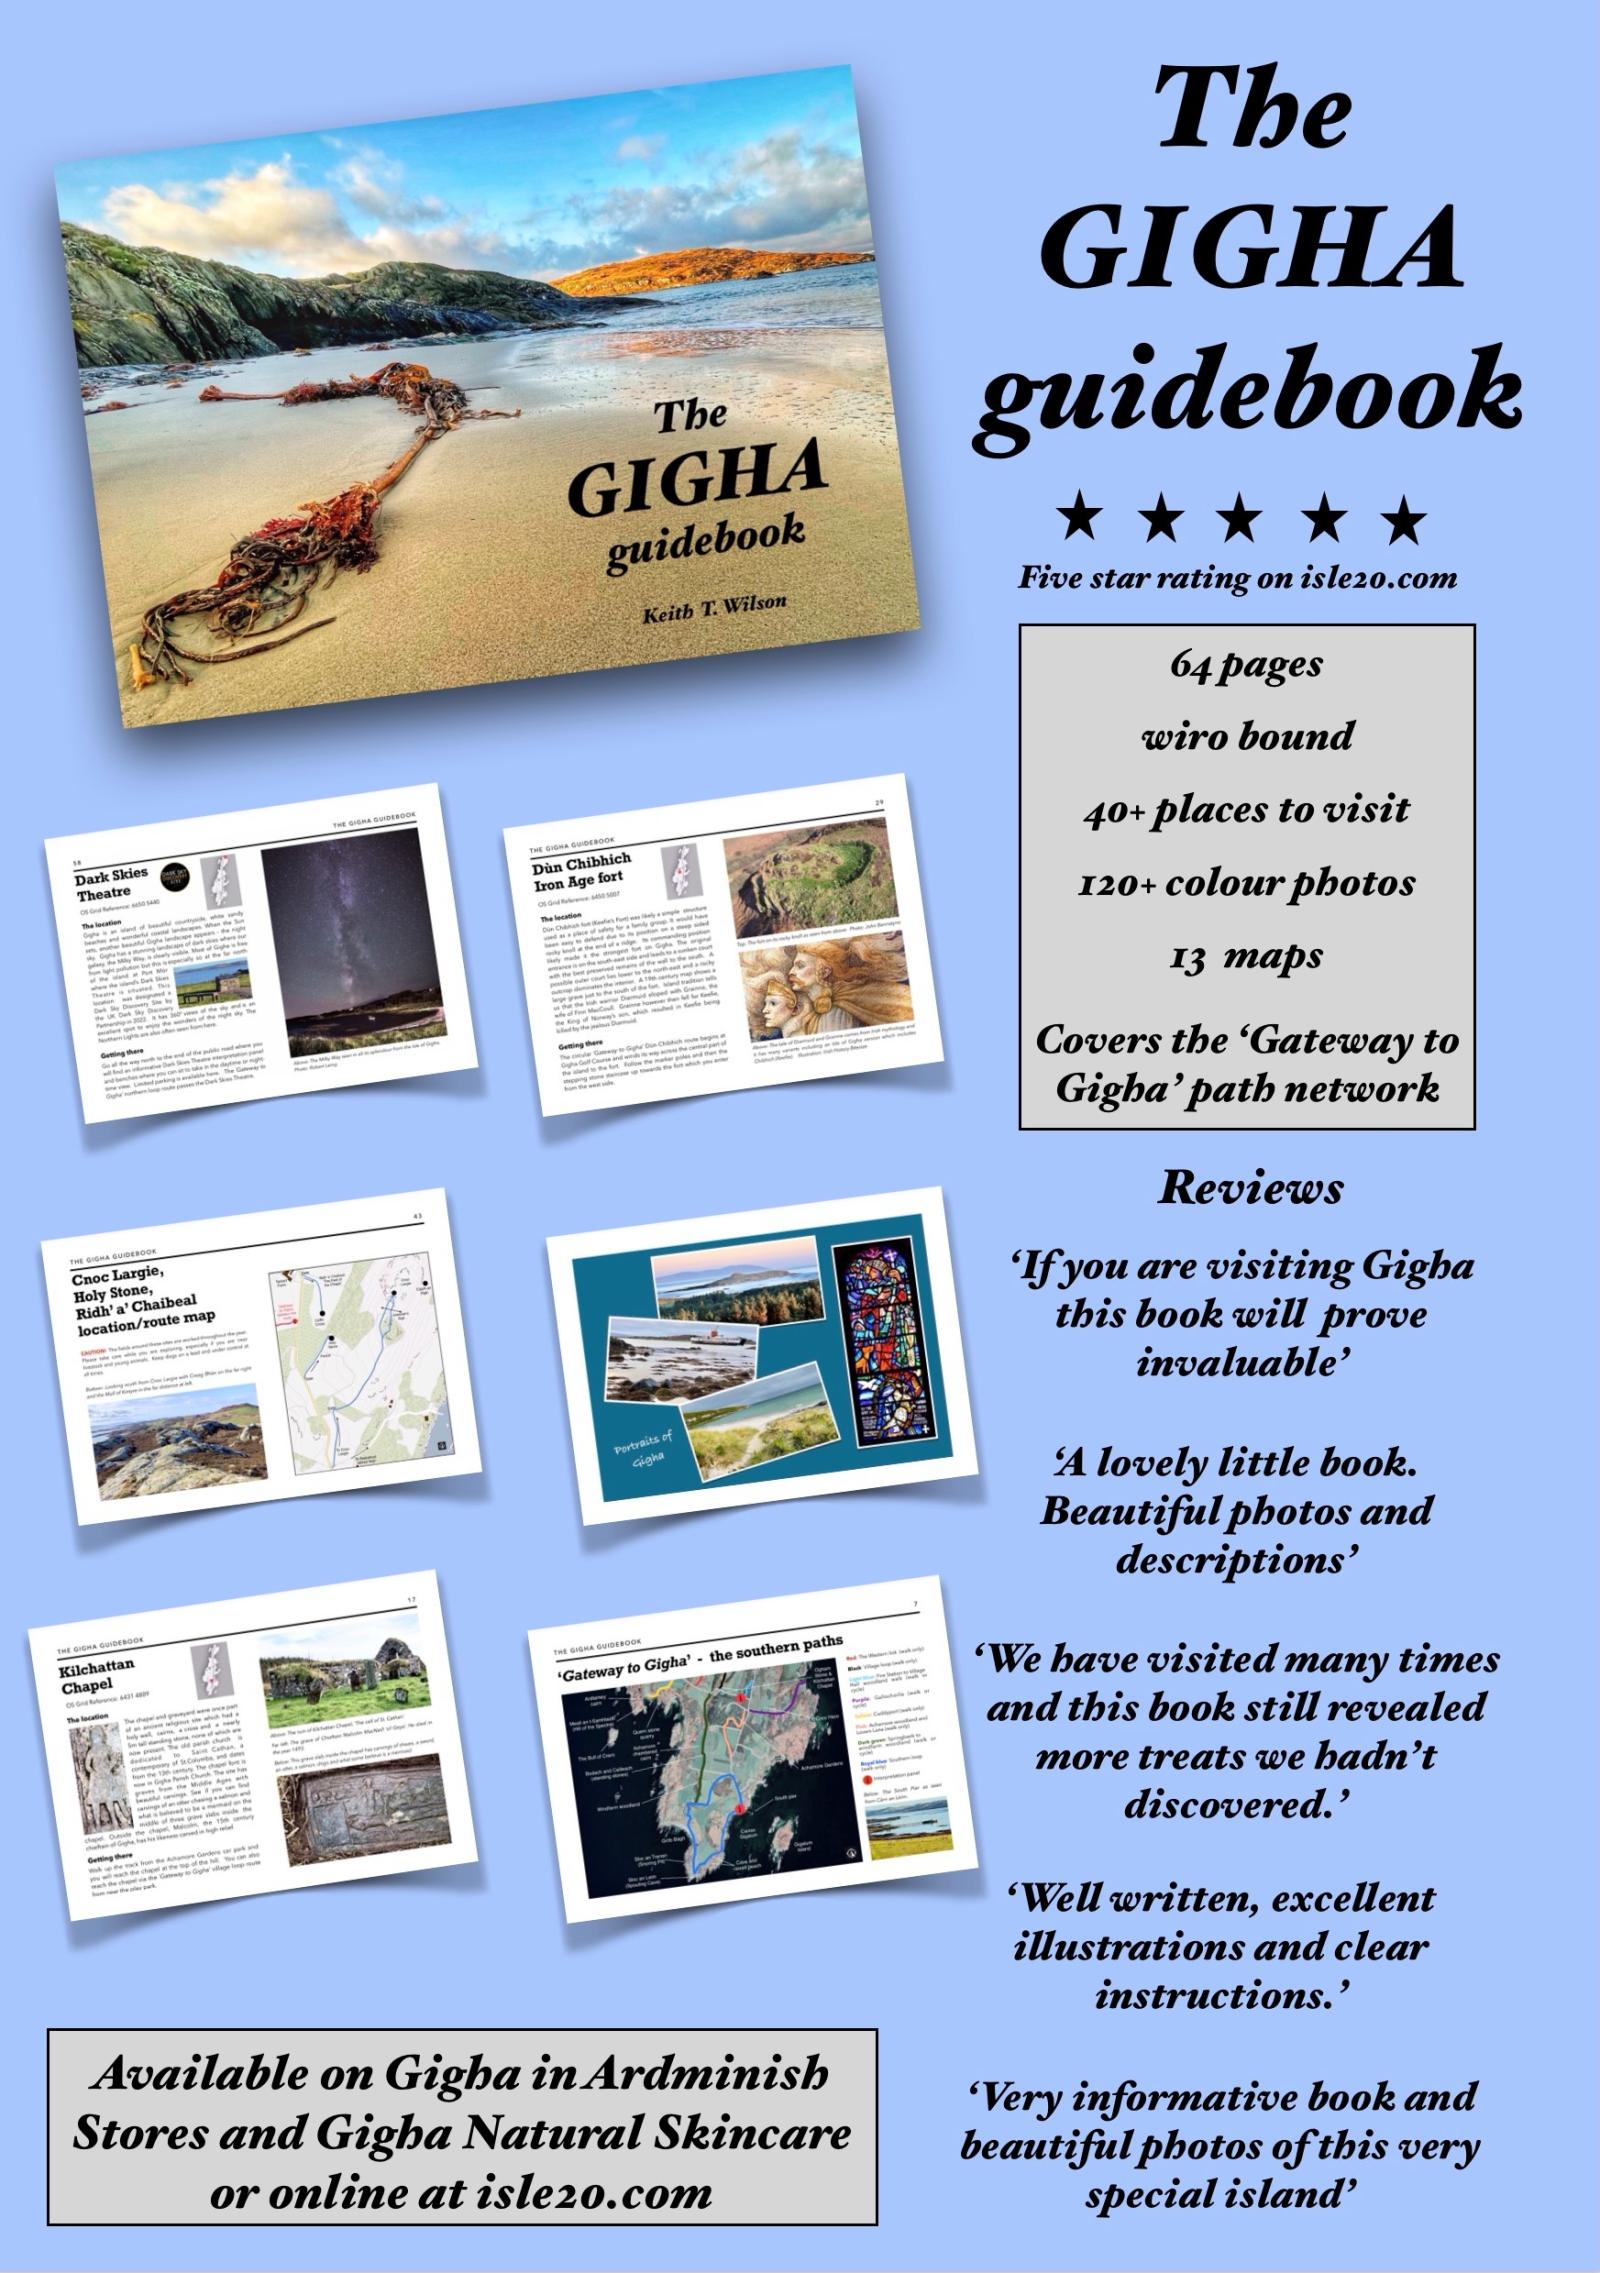 The Gigha Guidebook